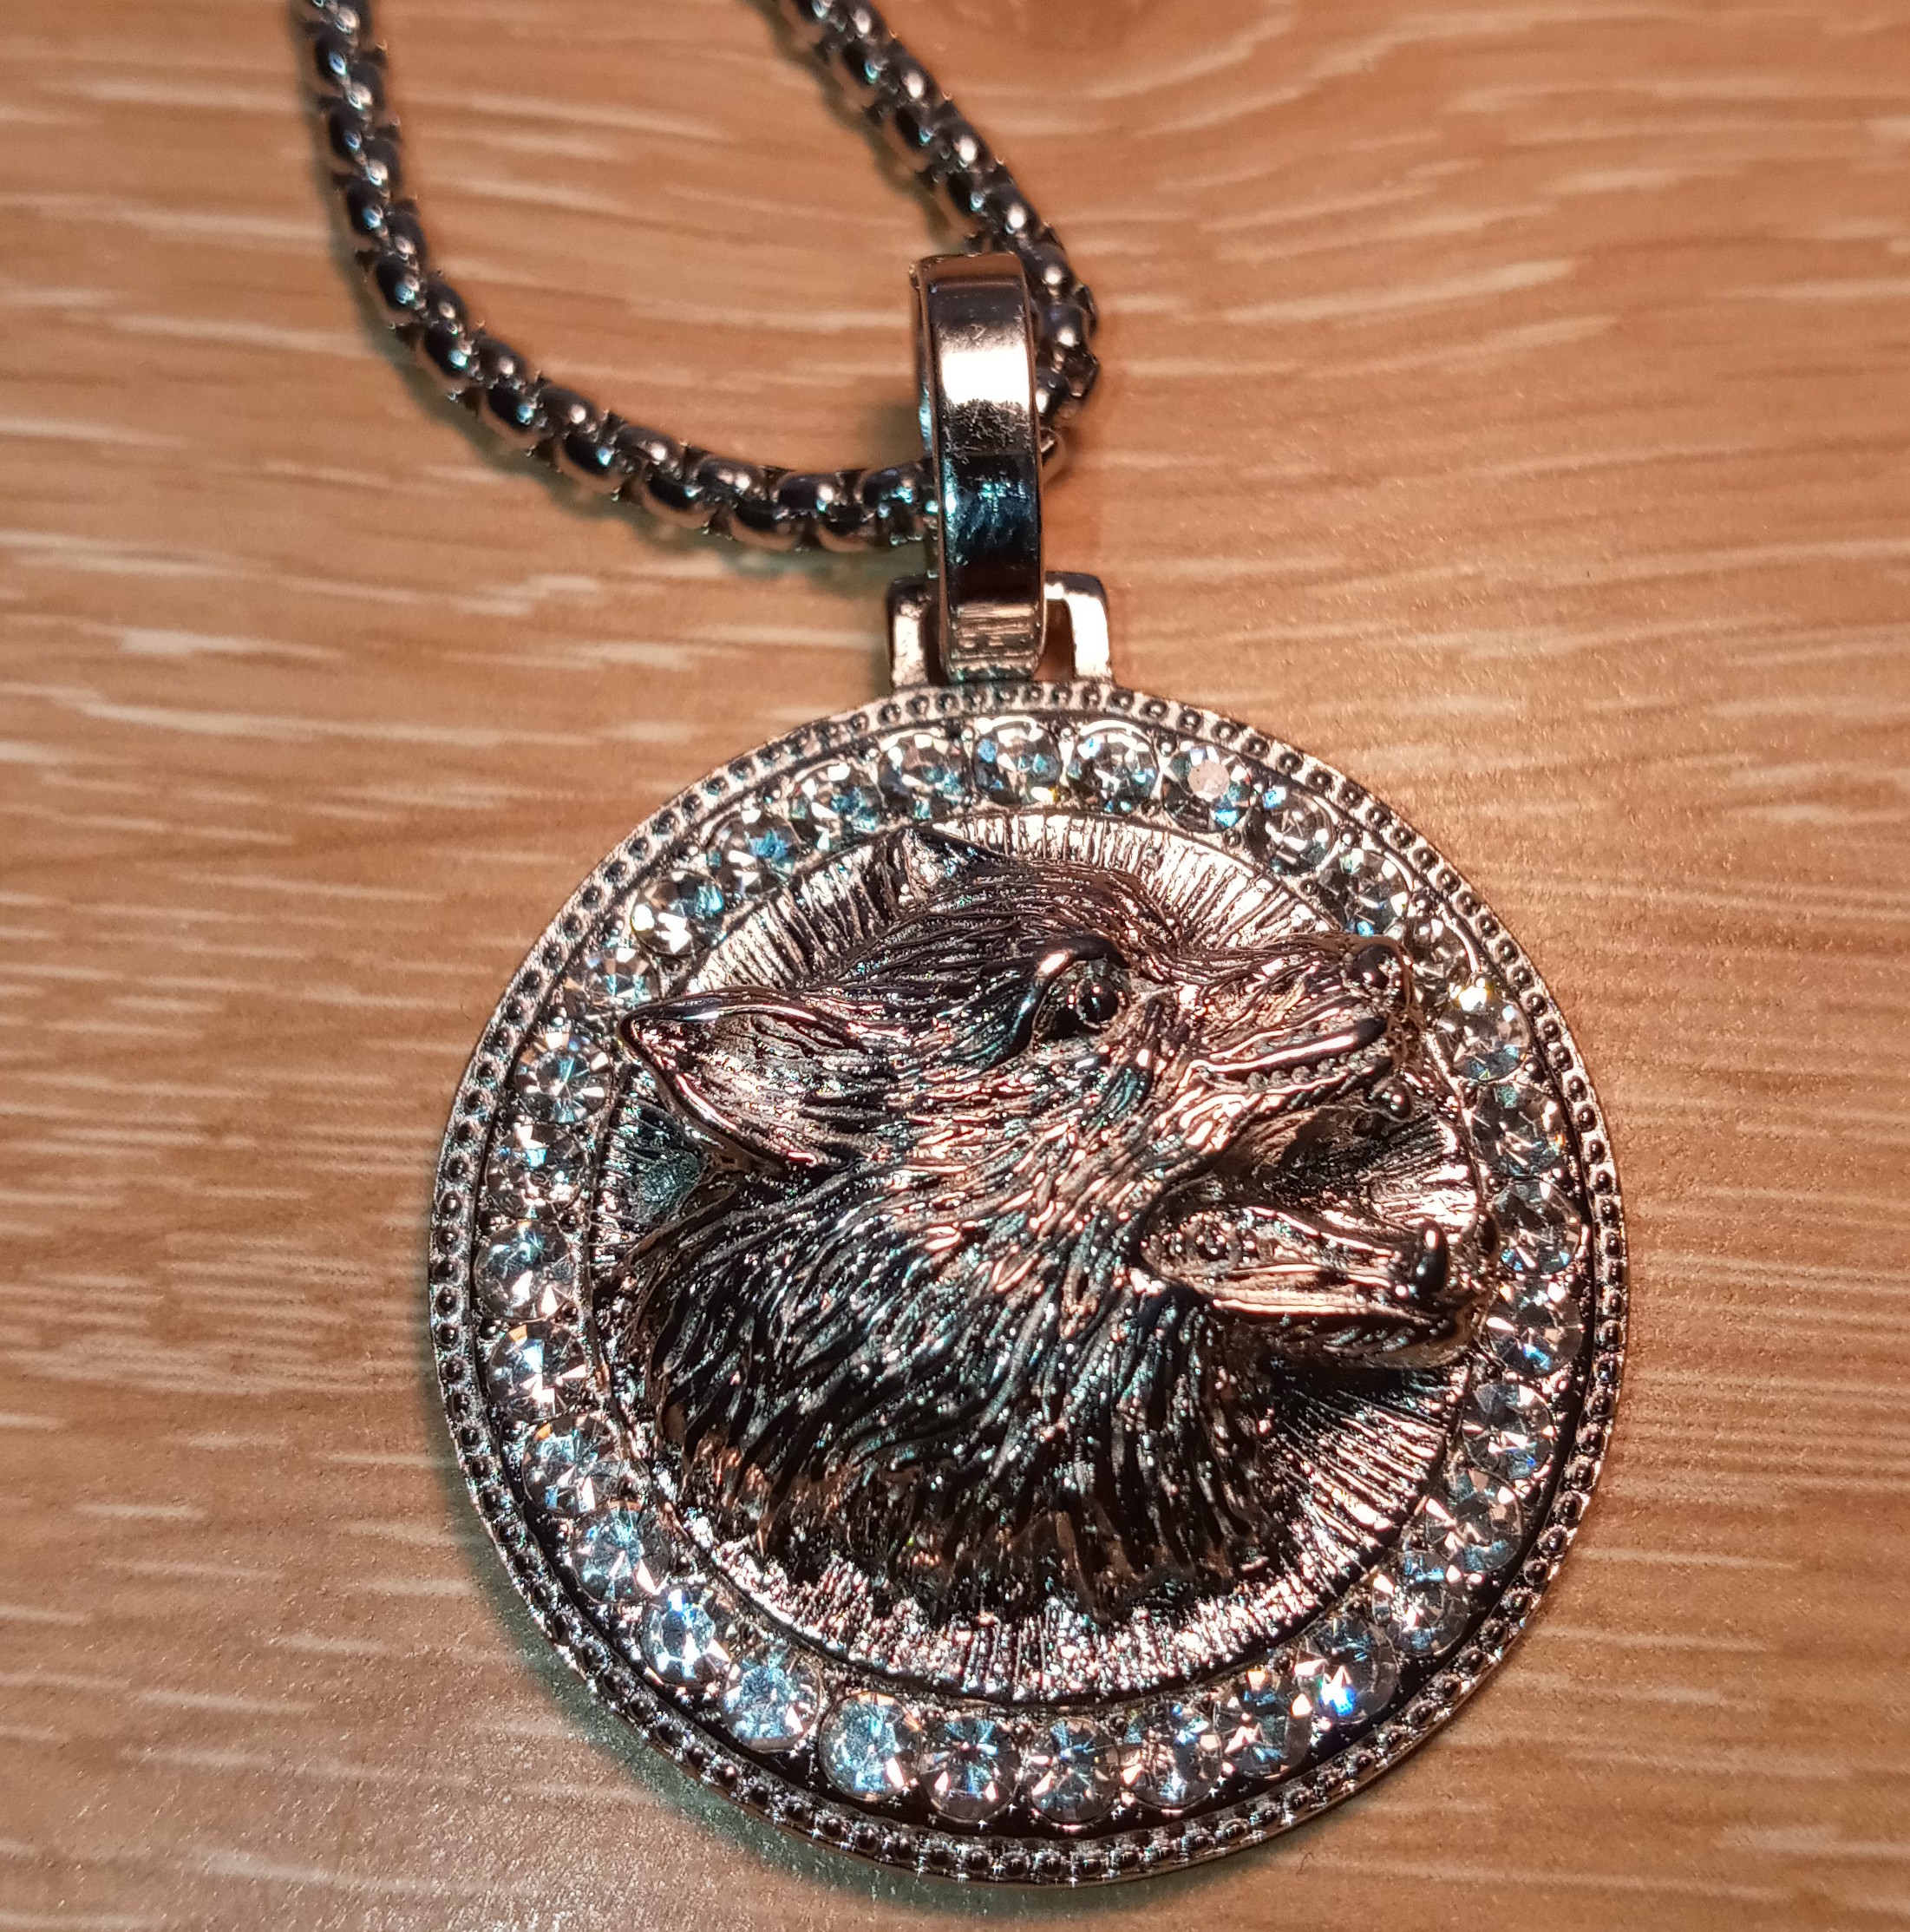 Benjamin wolf necklace